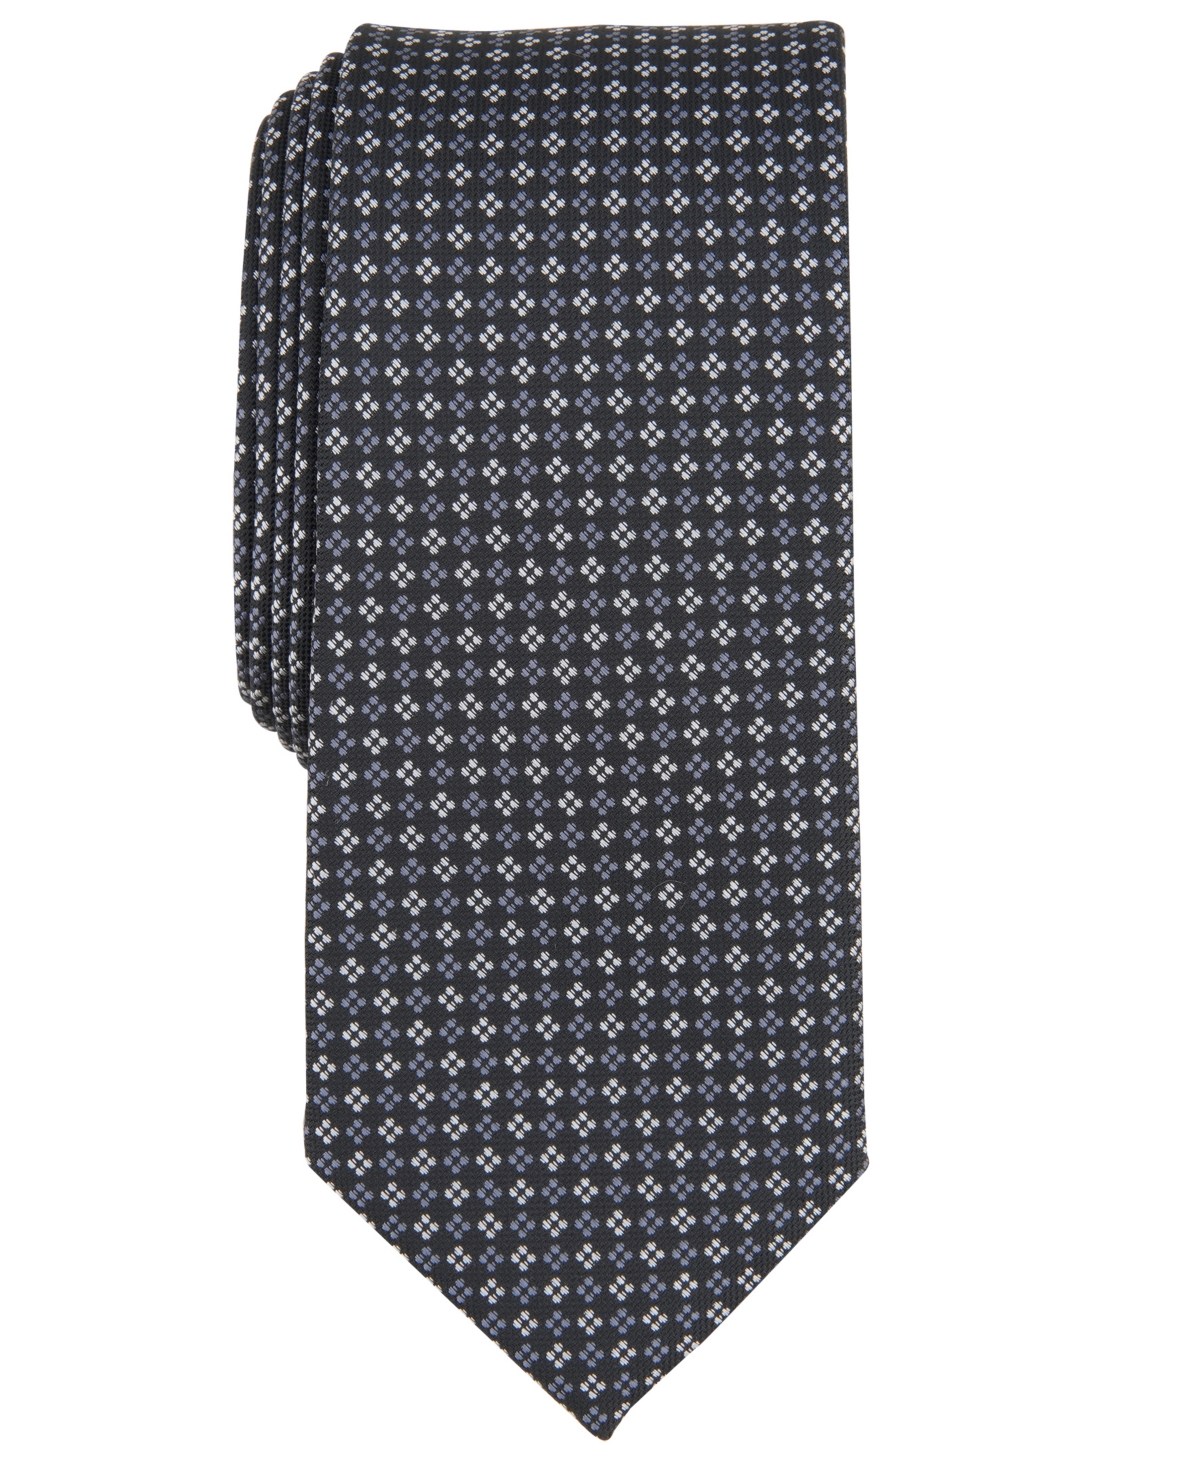 Men's Raleigh Micro-Diamond Tie, Created for Macy's - Navy